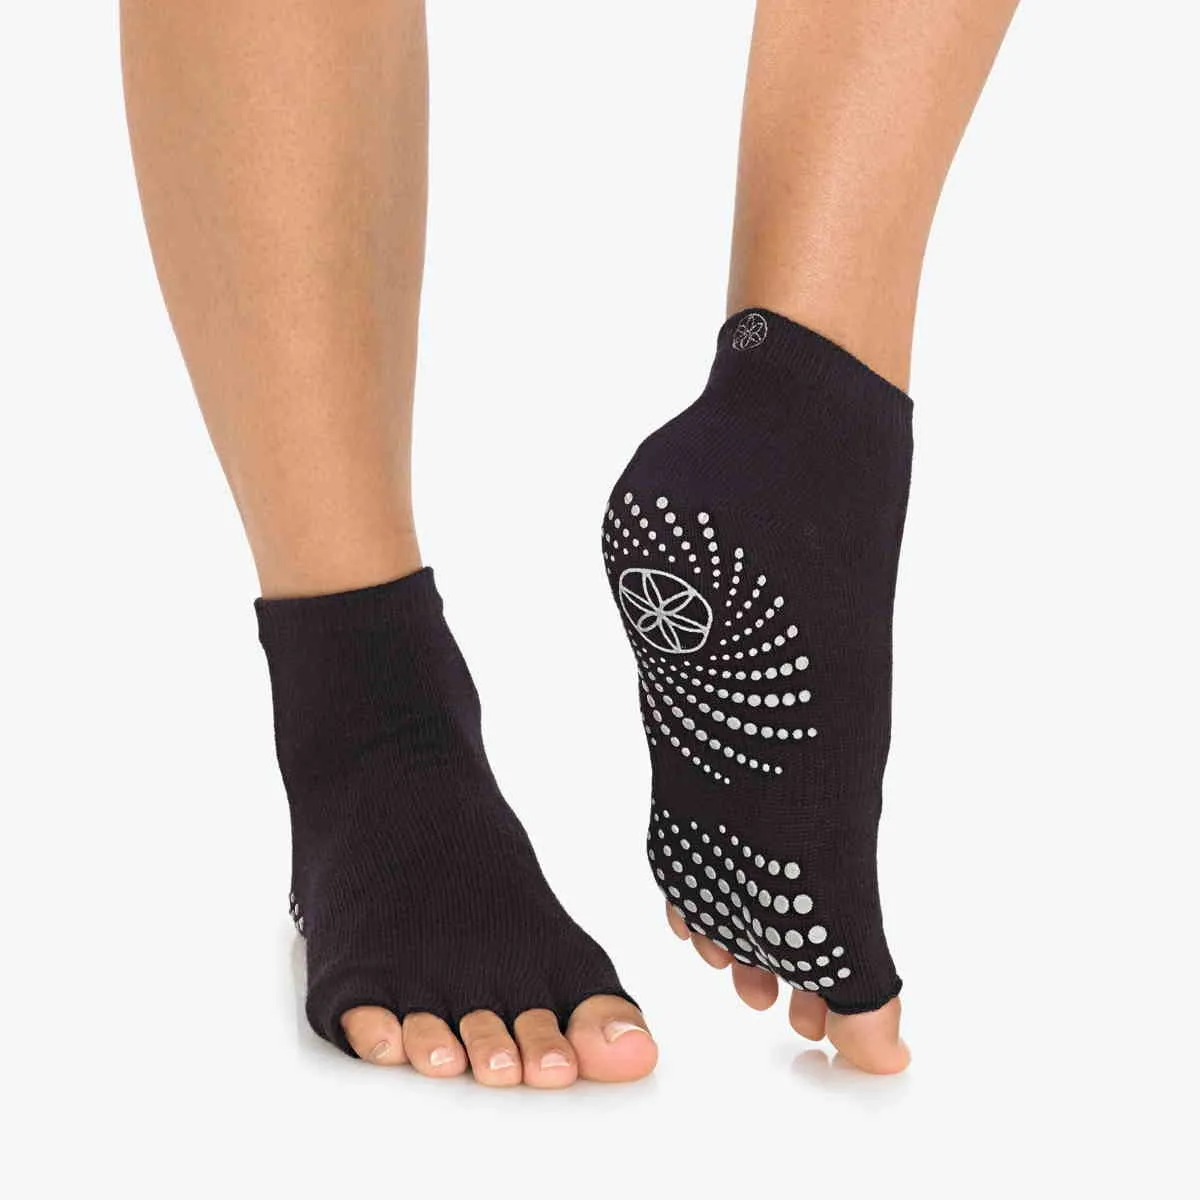 GAIAM calcetines de yoga antideslizante negro 2-pack